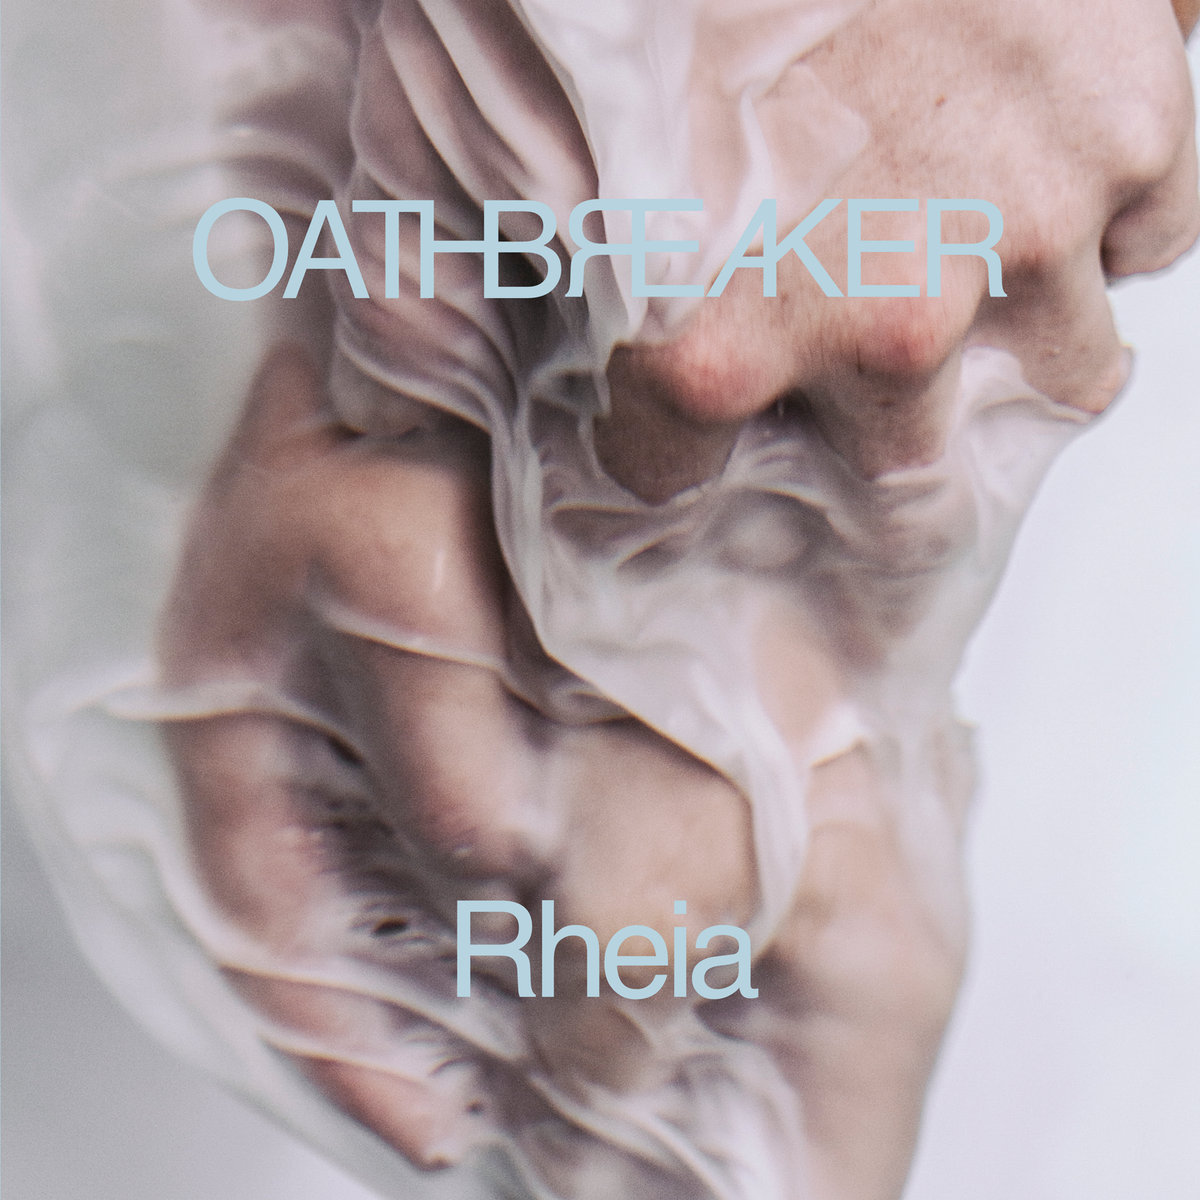 OATHBREAKER nuevo disco “Rheia” streaming